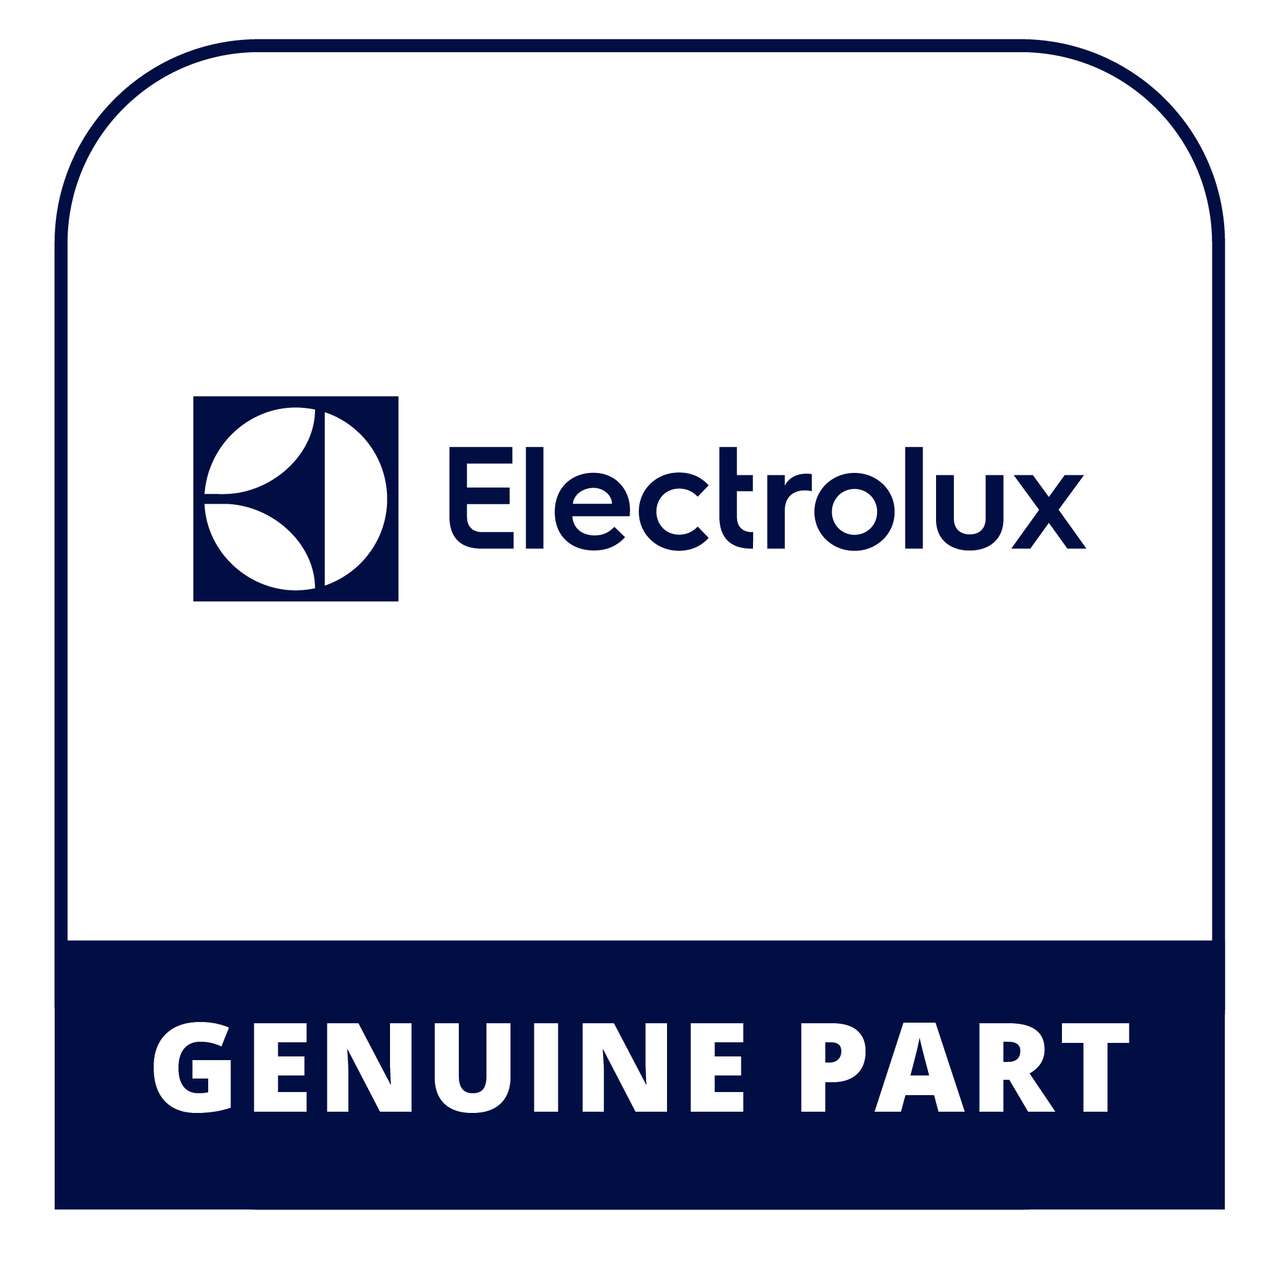 Frigidaire - Electrolux 318095956 - Motor - Genuine Electrolux Part